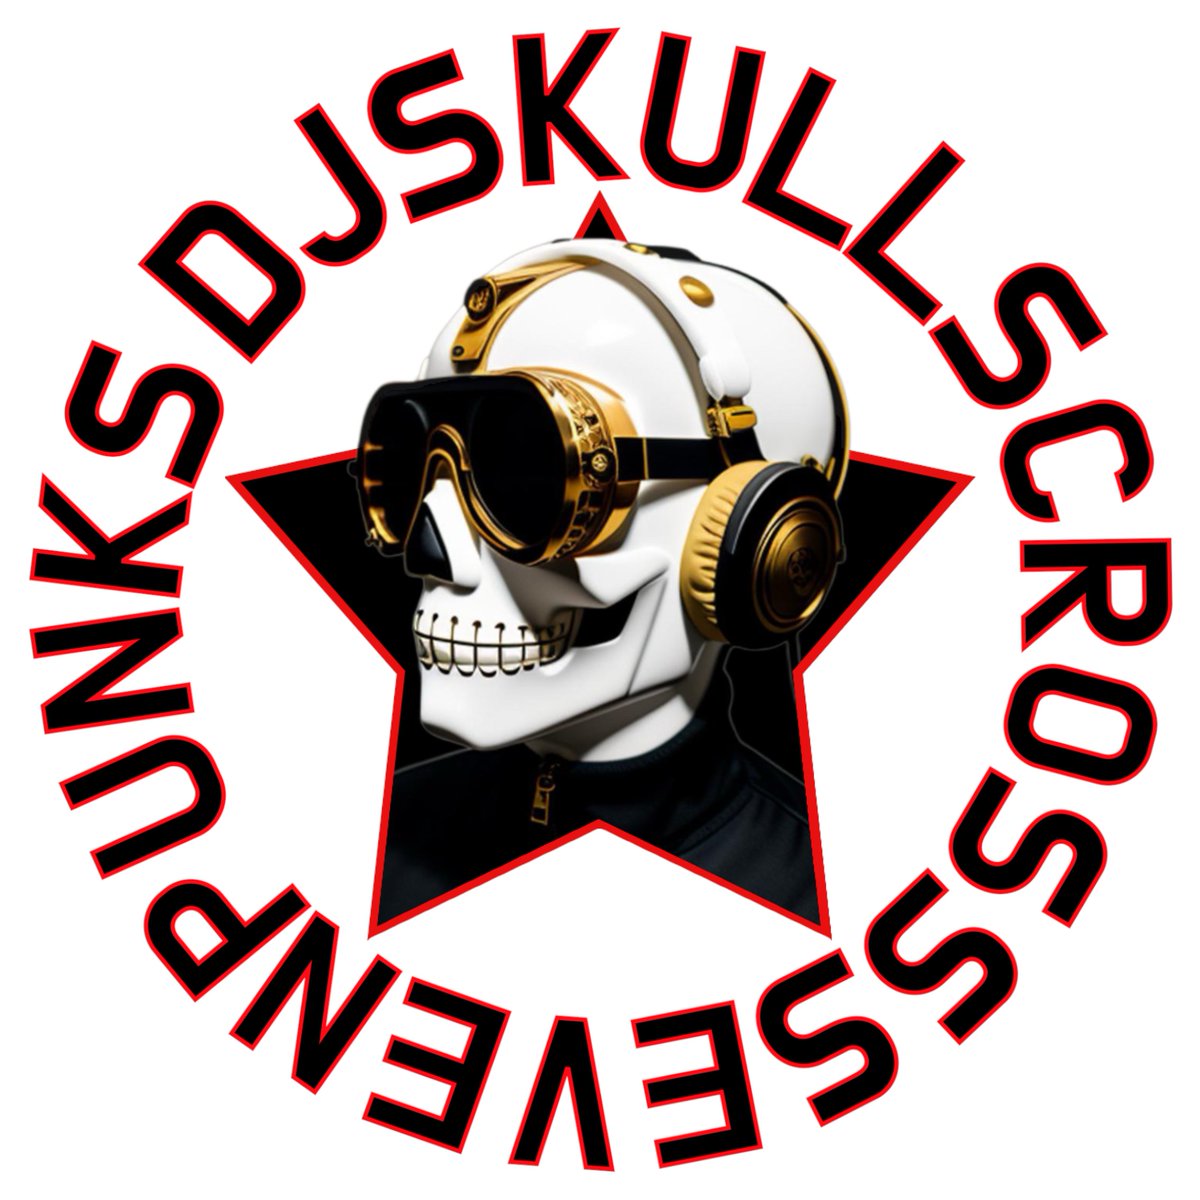 DJ Skulls 467
New Ver !
Check out suzuri!
For commercialization requests, please leave a comment
shop ▶ suzuri.jp/C7PUNKS

#nft #NFTart #nfts #nftGiveway #PFP #skull #skullart
#DJ #DJSkulls #objkt #objktcom #tezosart #AIart #nftshill #opensea #poligon #eth #Suzuri